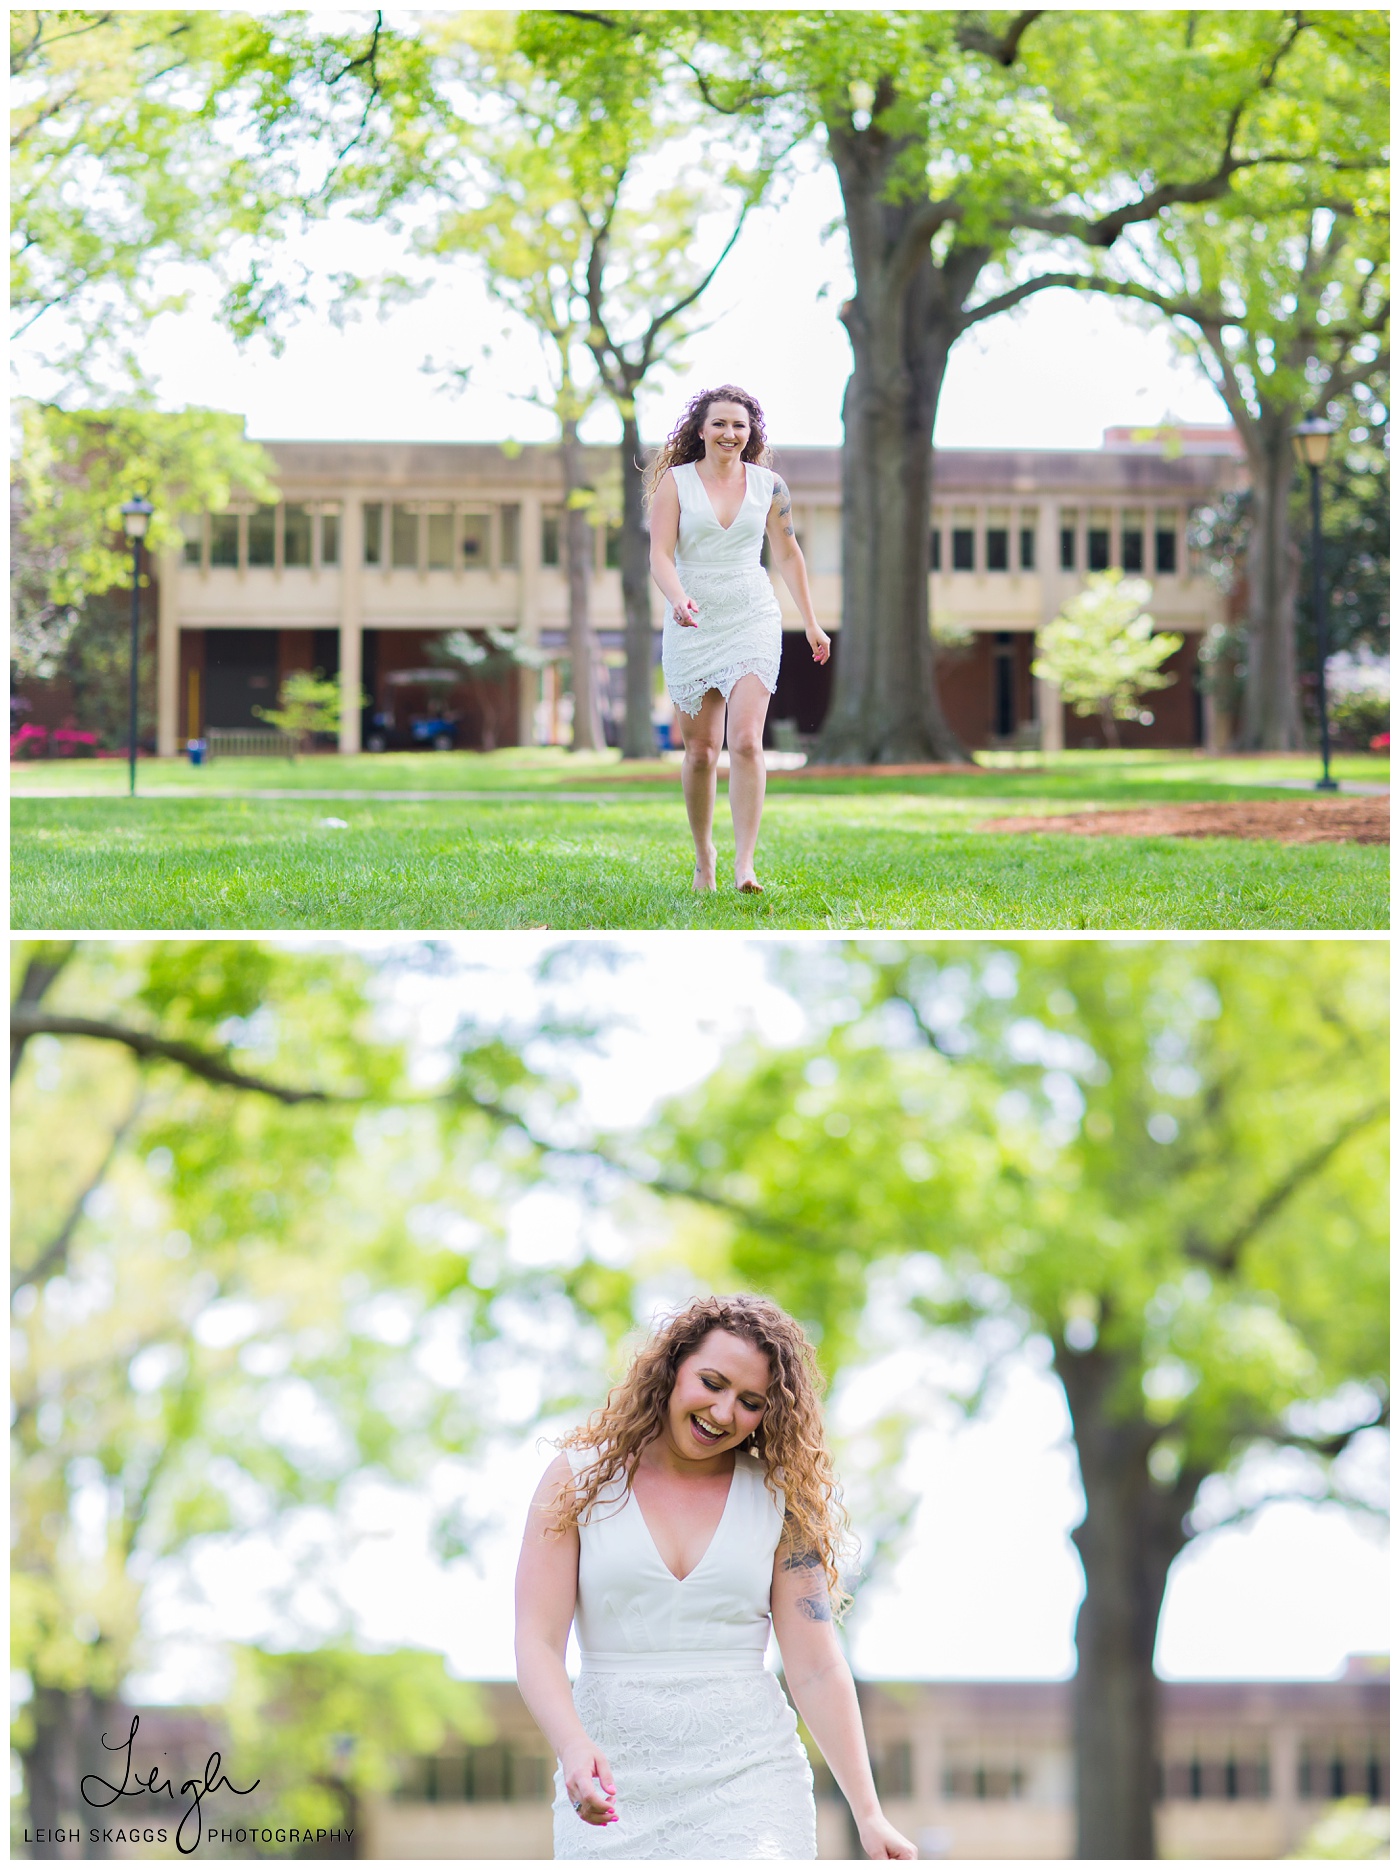 Lauren | ODU Graduate